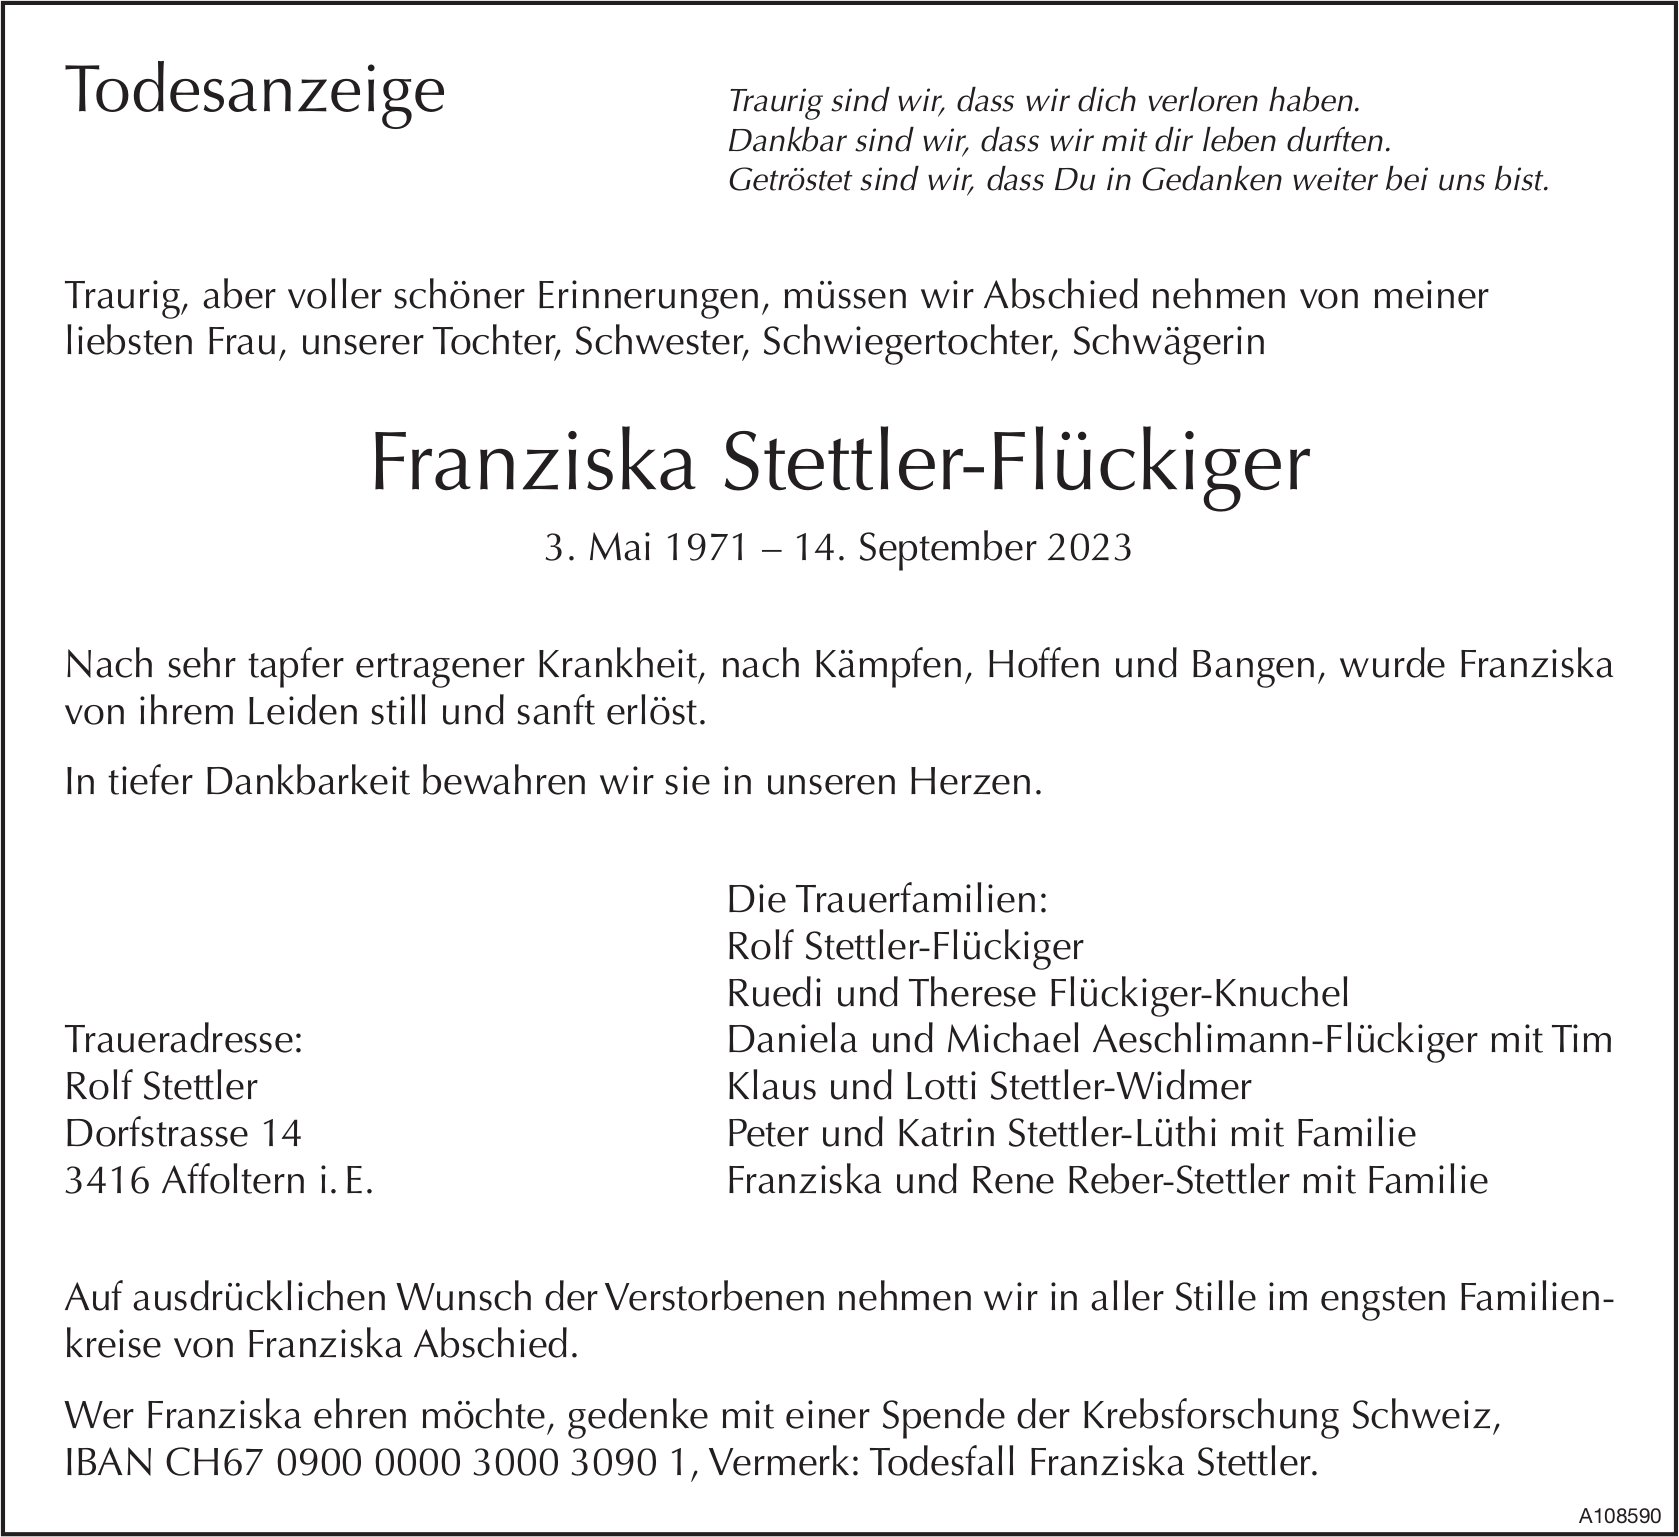 Franziska Stettler-Flückiger, September 2023 / TA